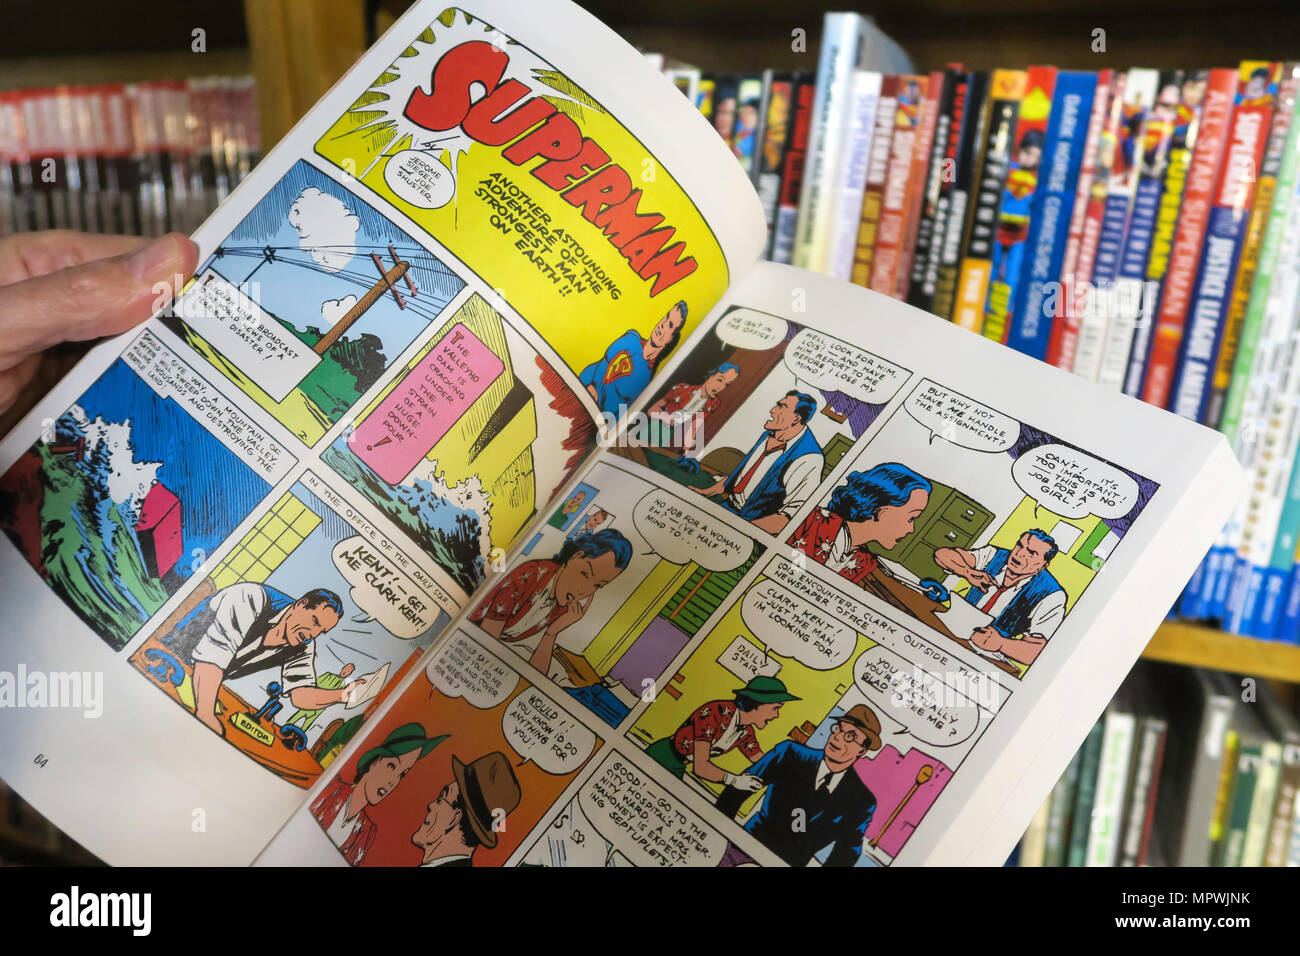 Superman Comic Books, NYC, USA Stock Photo